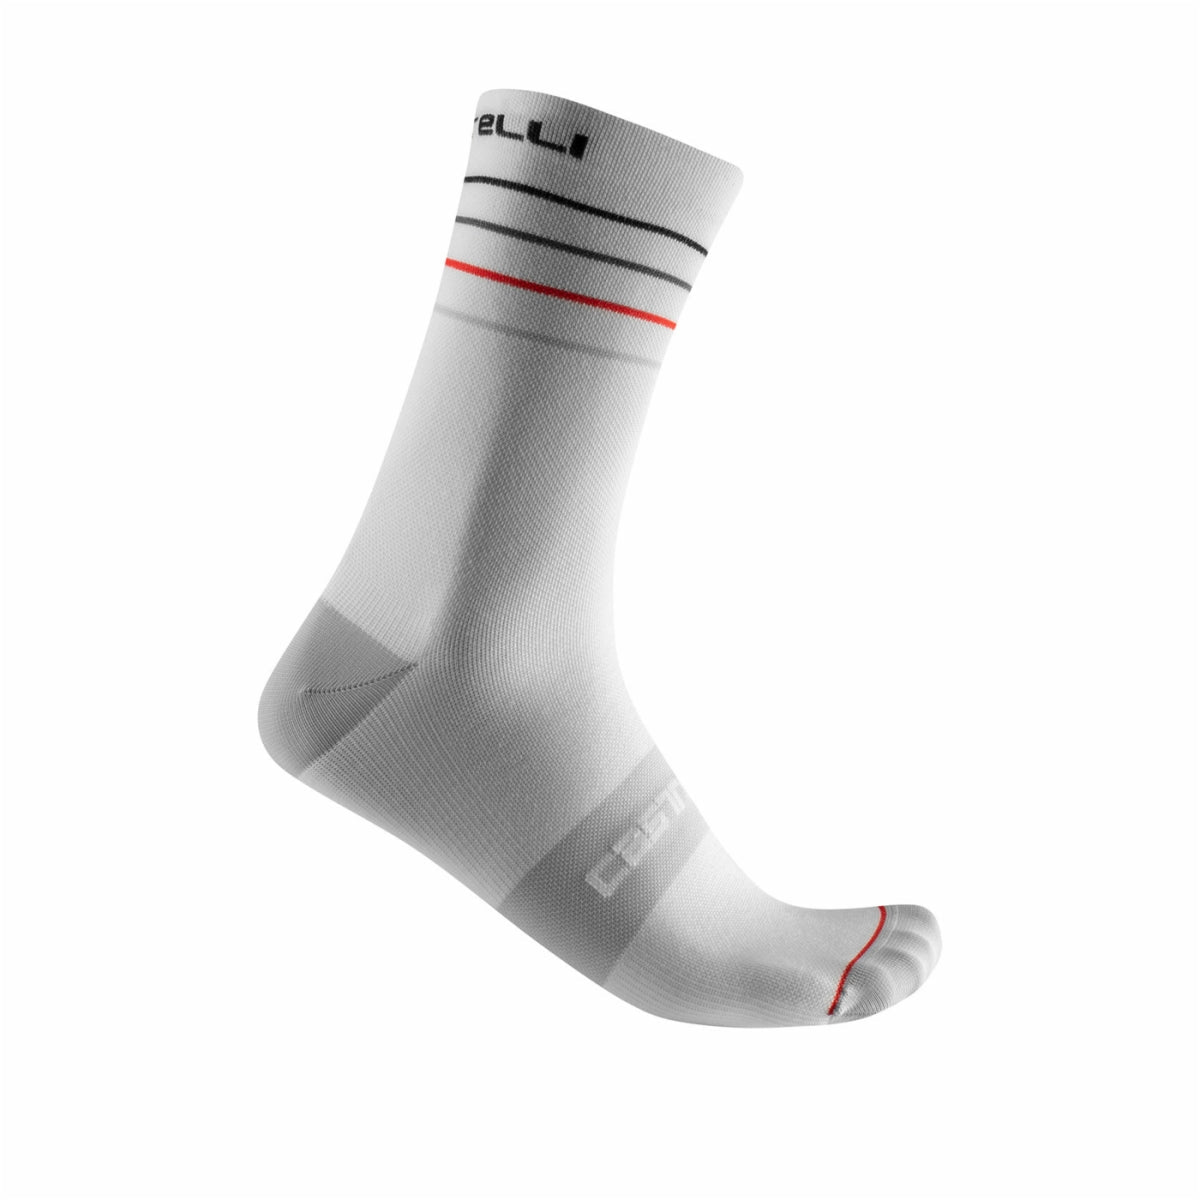 Castelli Endurance 15 Sock socks